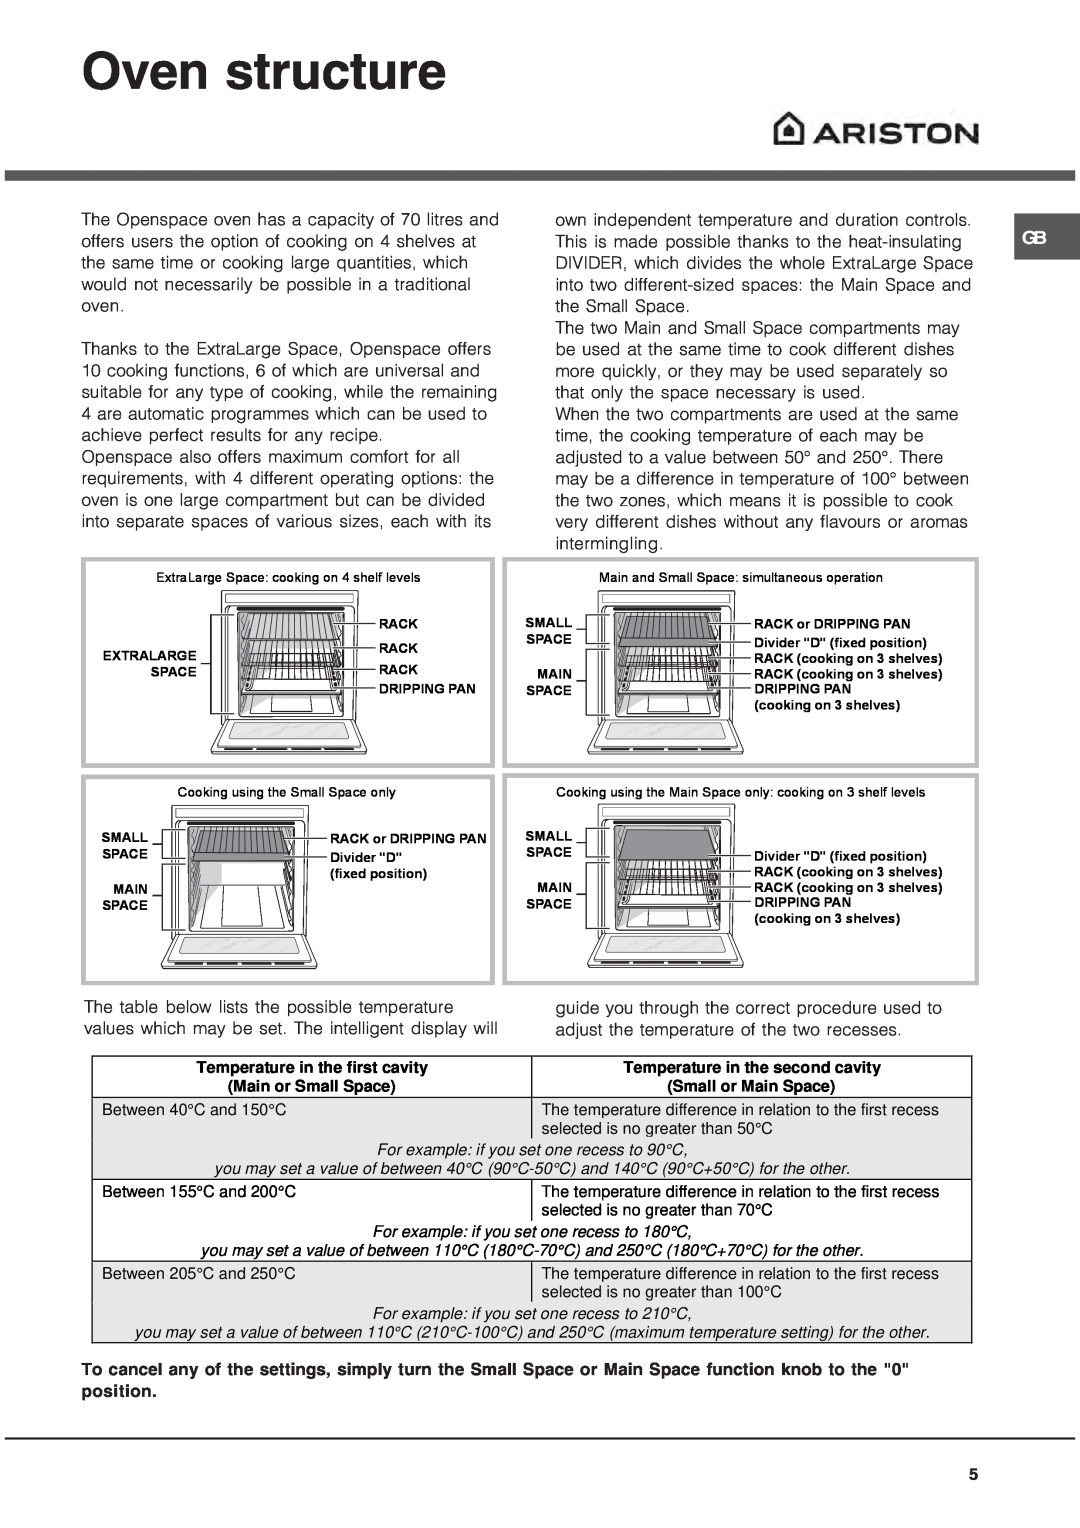 Ariston OS 99D P IX manual Oven structure 